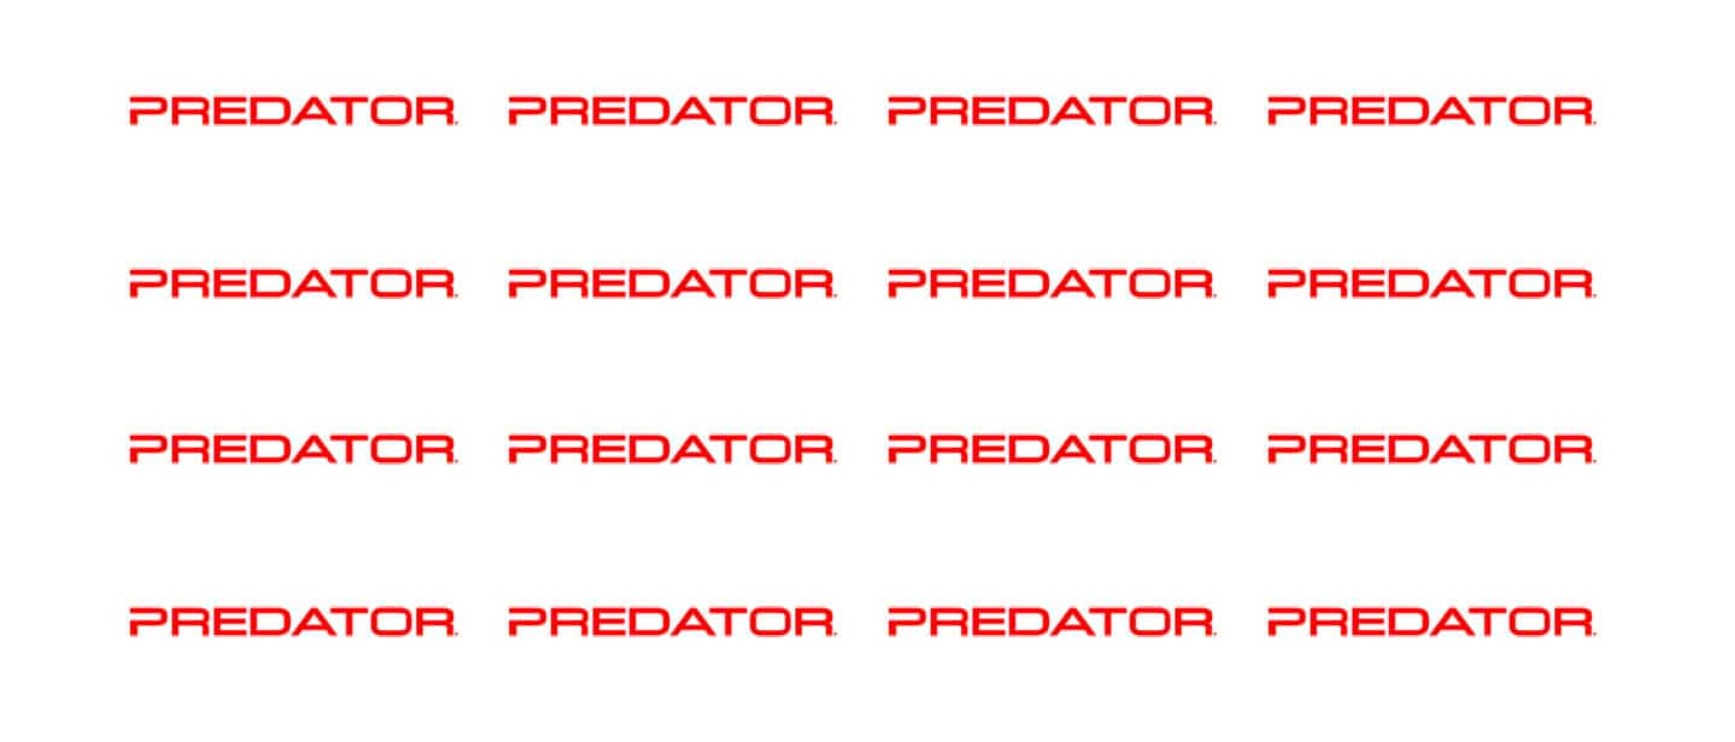 What is Predator Generators?